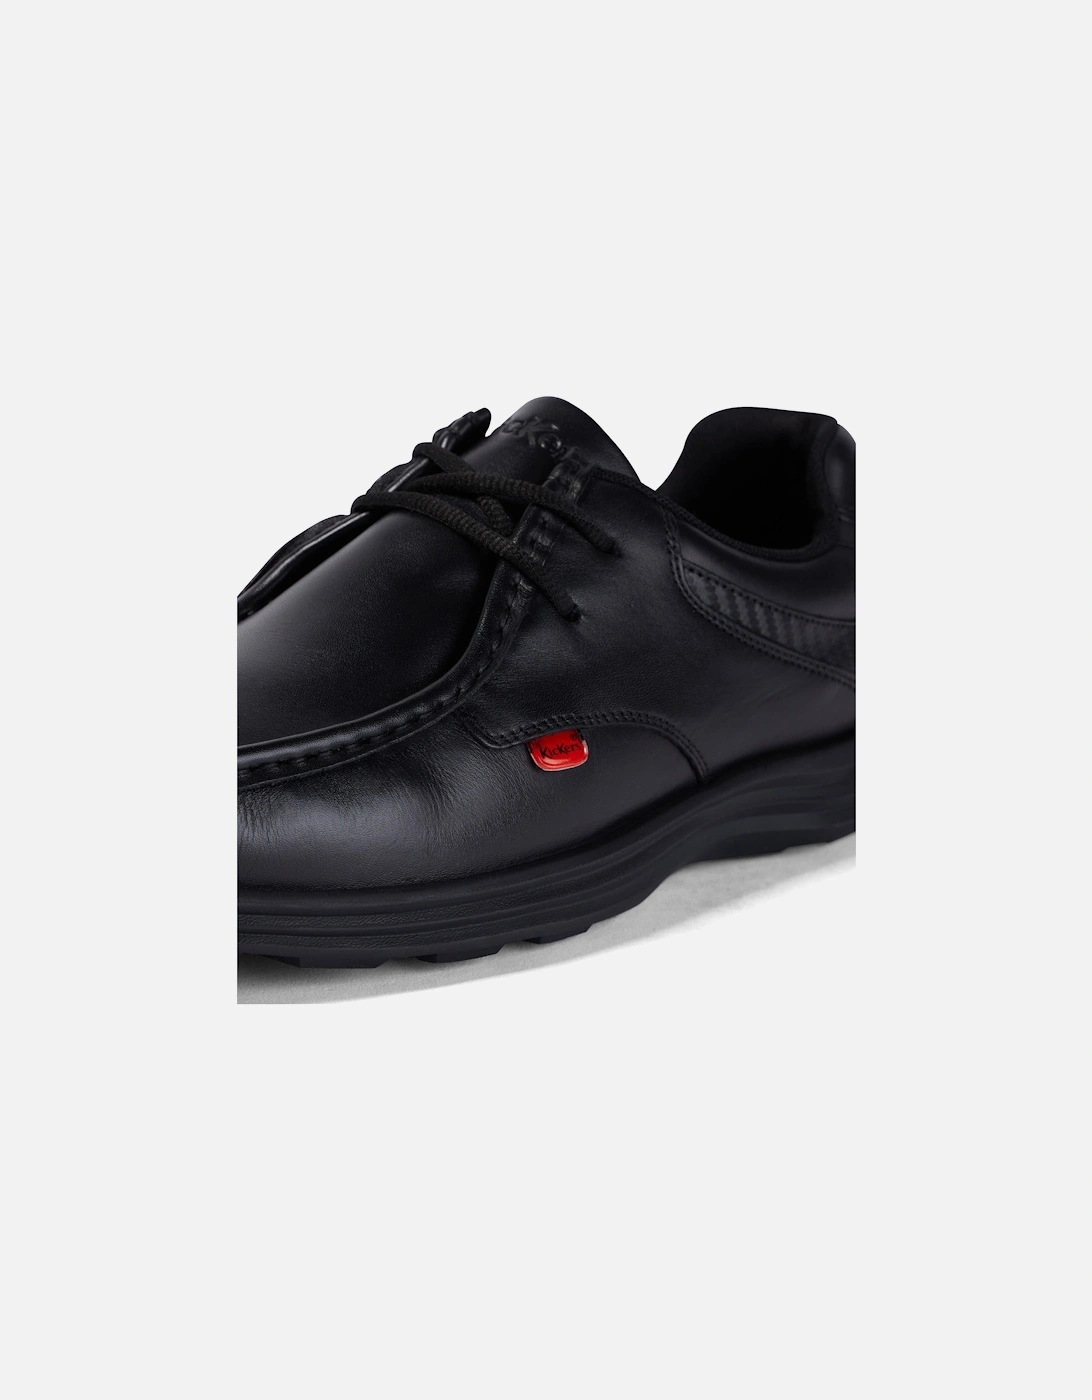 Mens Reasan Shoes (Black)